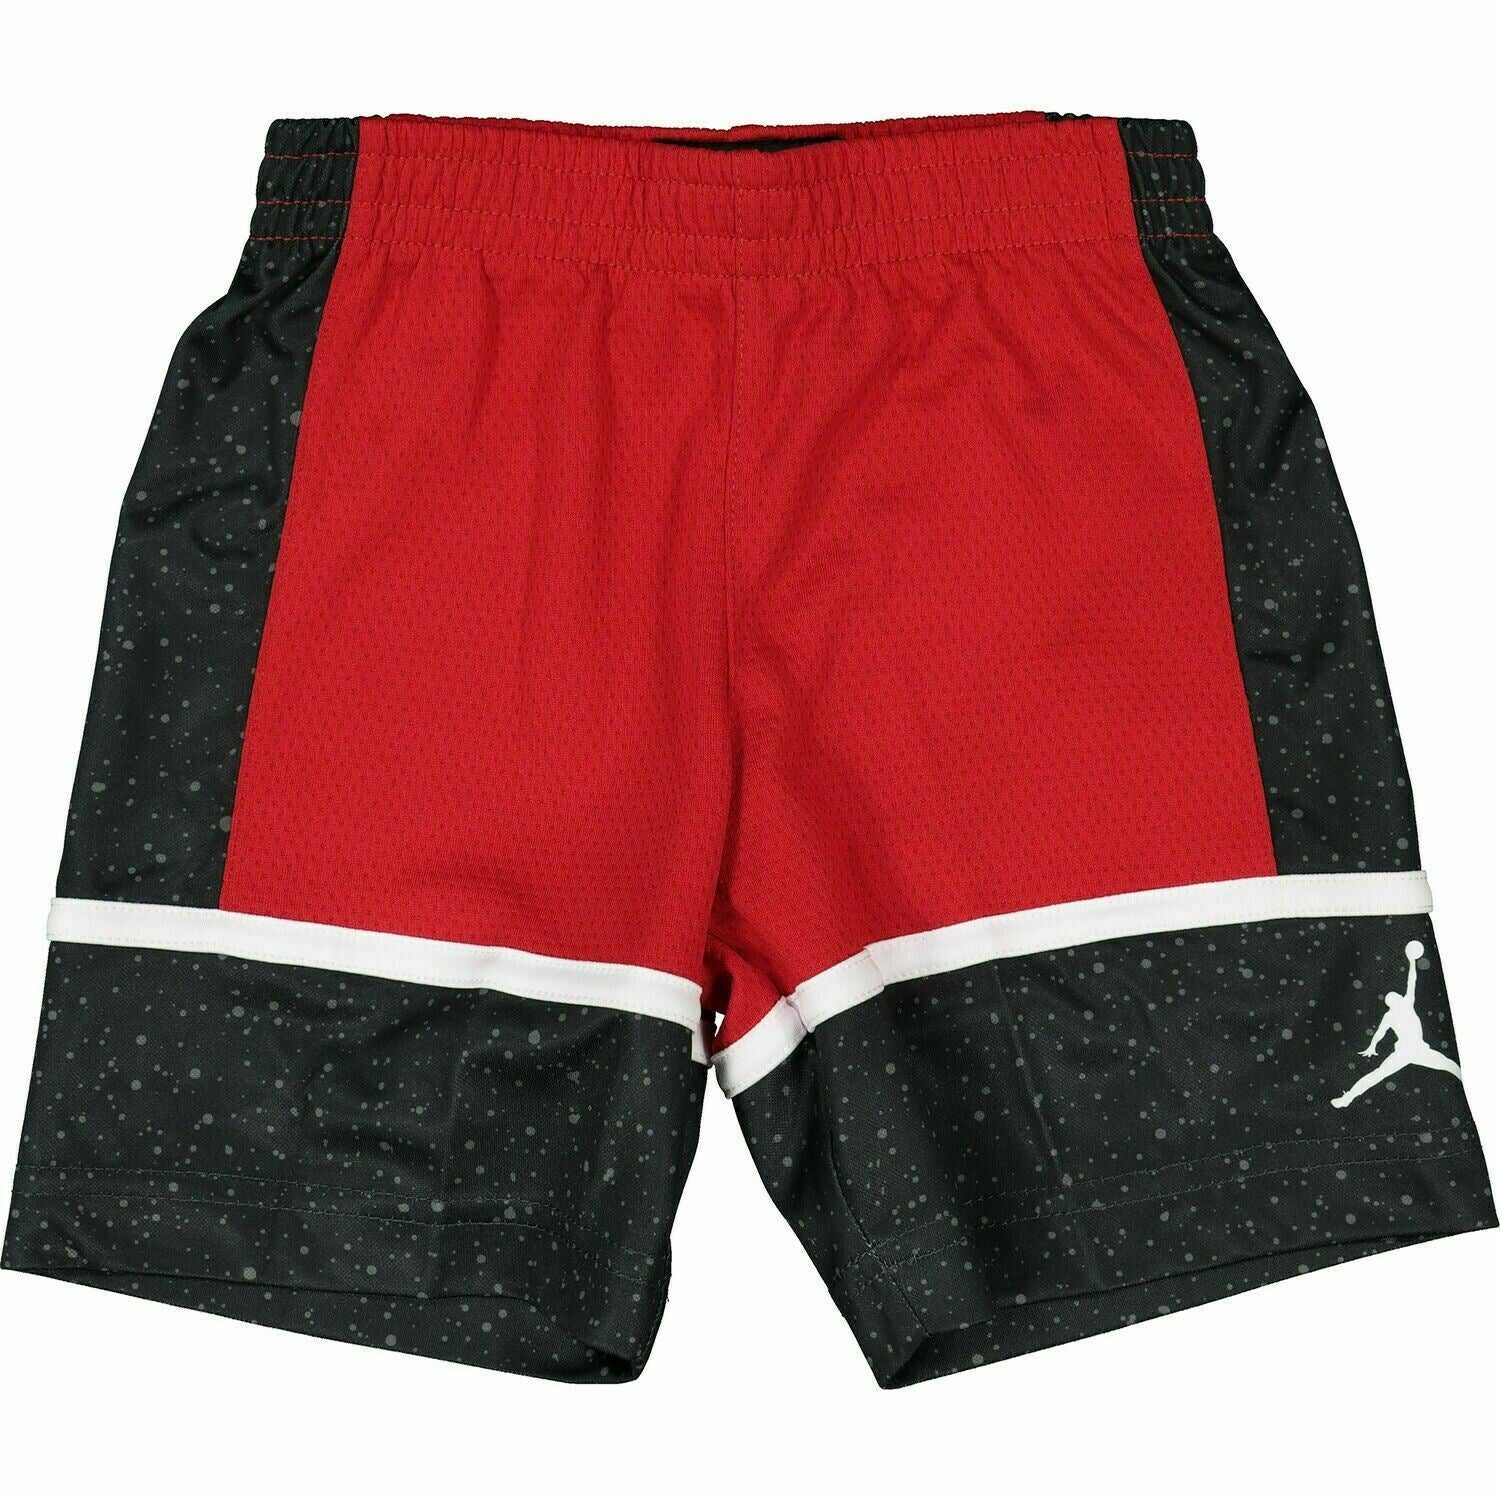 NIKE AIR JORDAN Boys' Basketball Shorts, Colour-block, Red/Black, size 4 Years